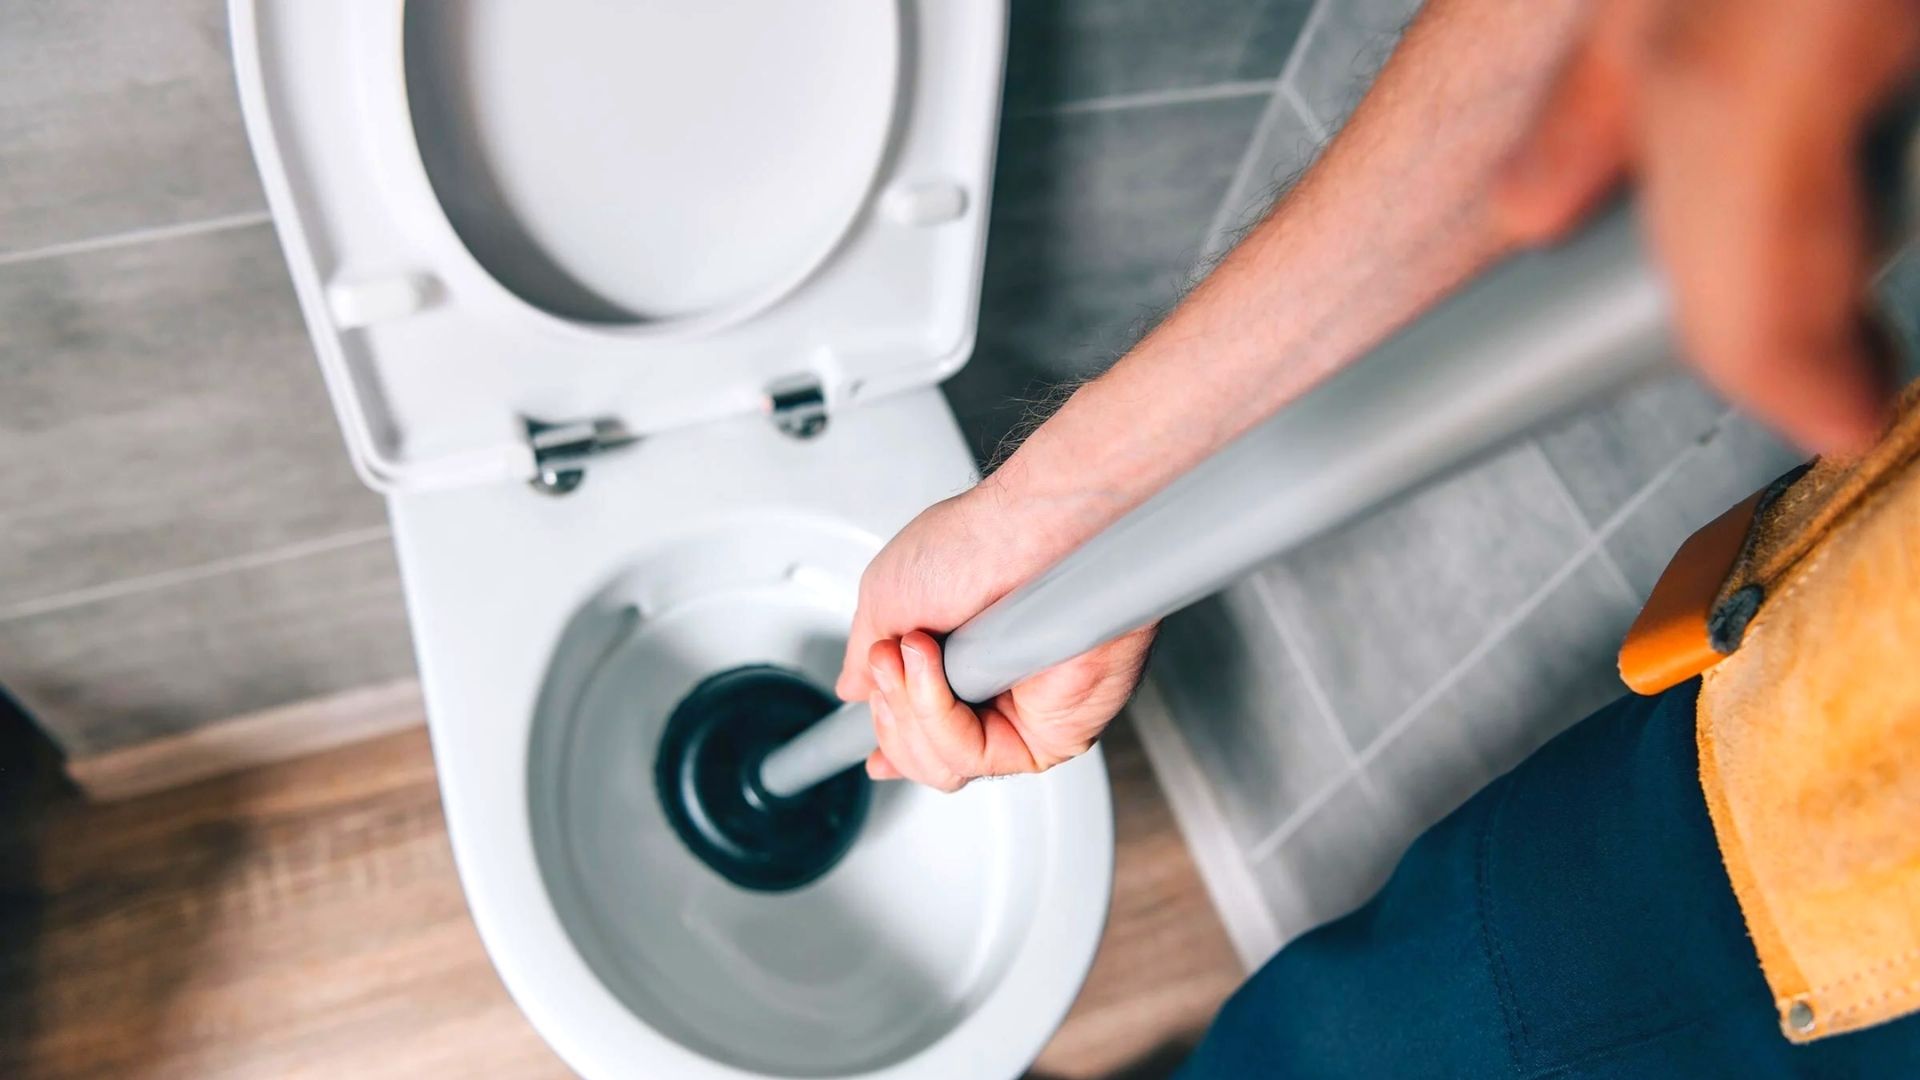 https://zeve.au/wp/uploads/2022/03/long-plunger-being-used-to-unclog-toilet.jpg